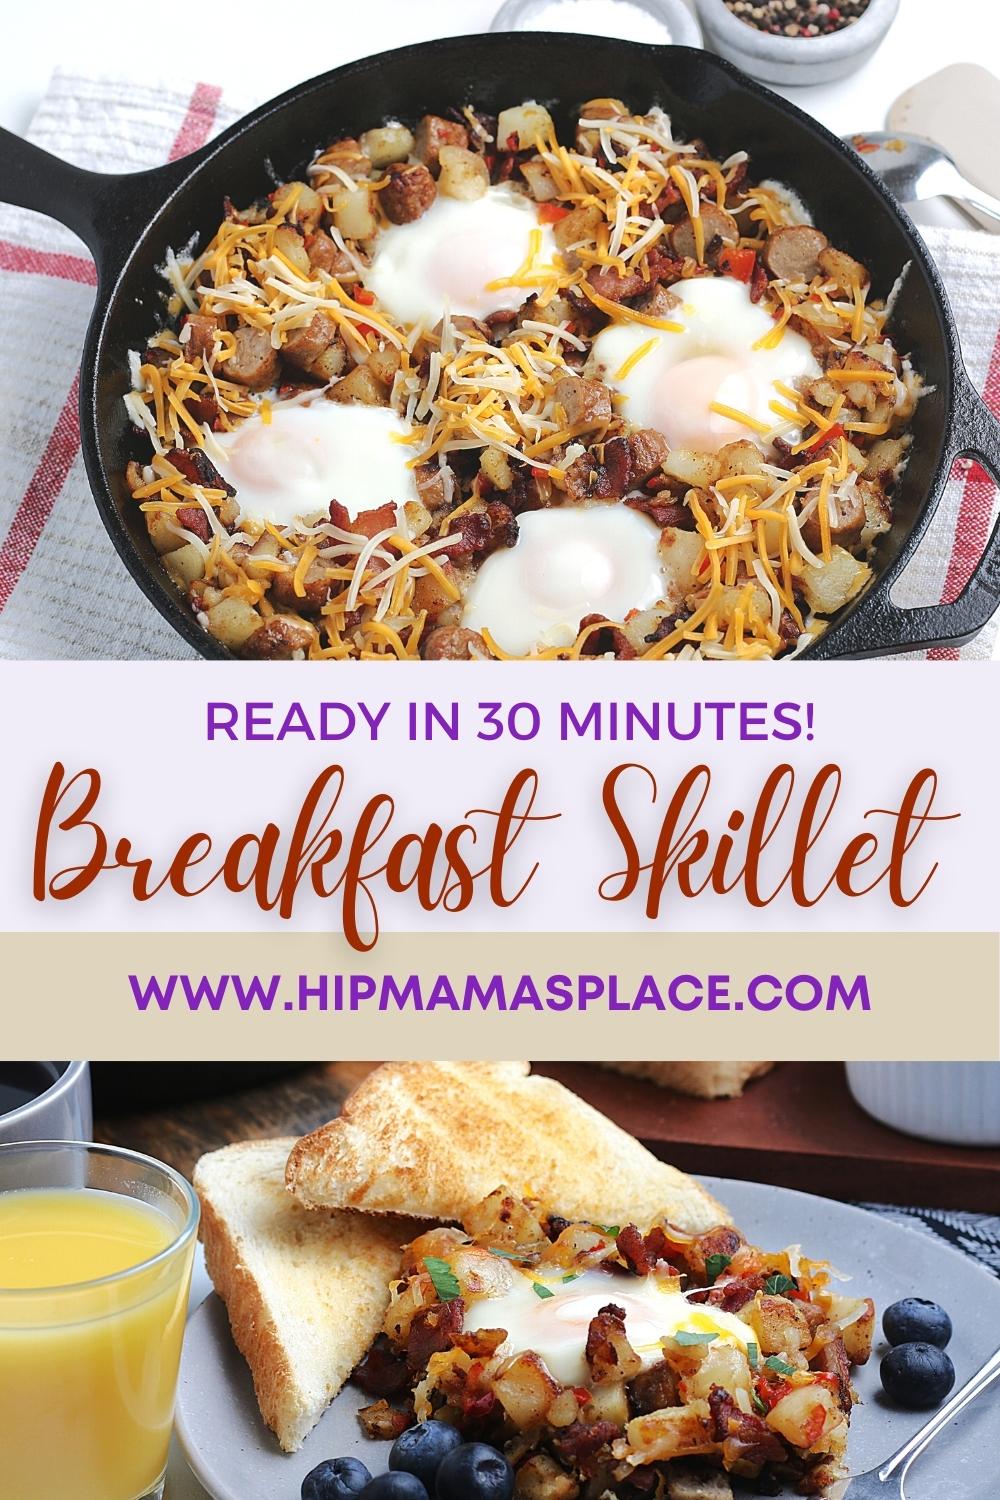 Easy Breakfast Skillet Recipe {Cooks in 20 Minutes!}